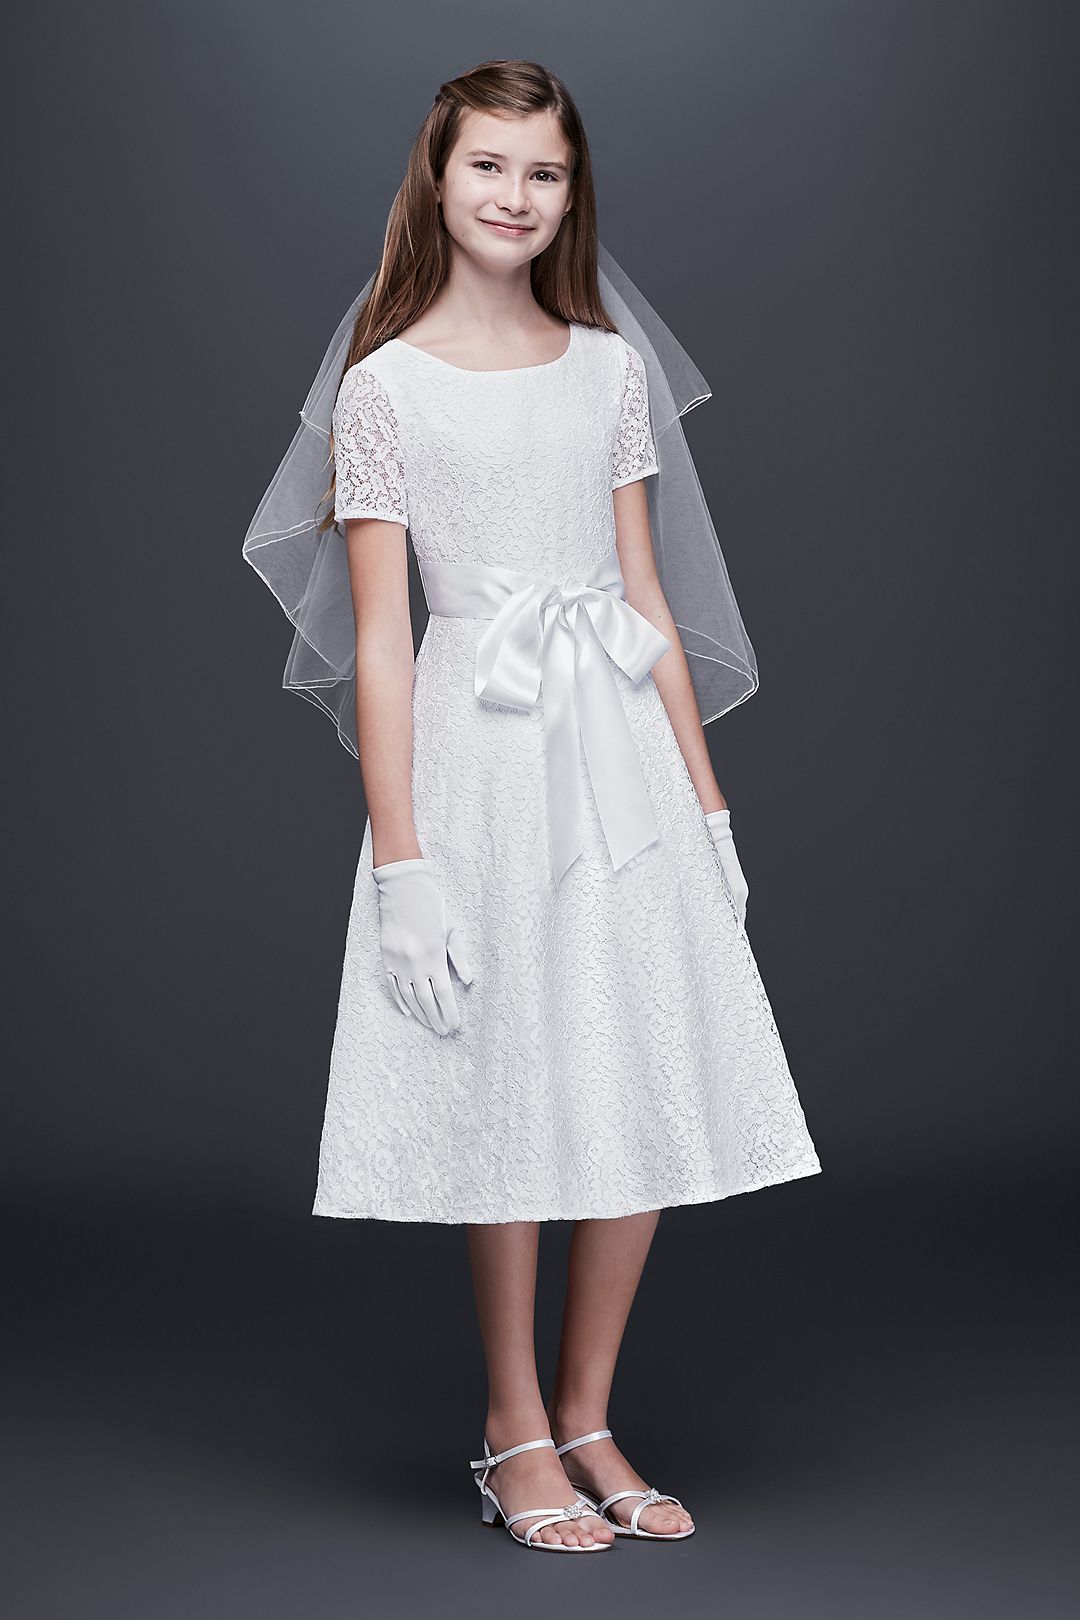 Lace A-Line Communion Dress with Wide Satin Sash Image 1